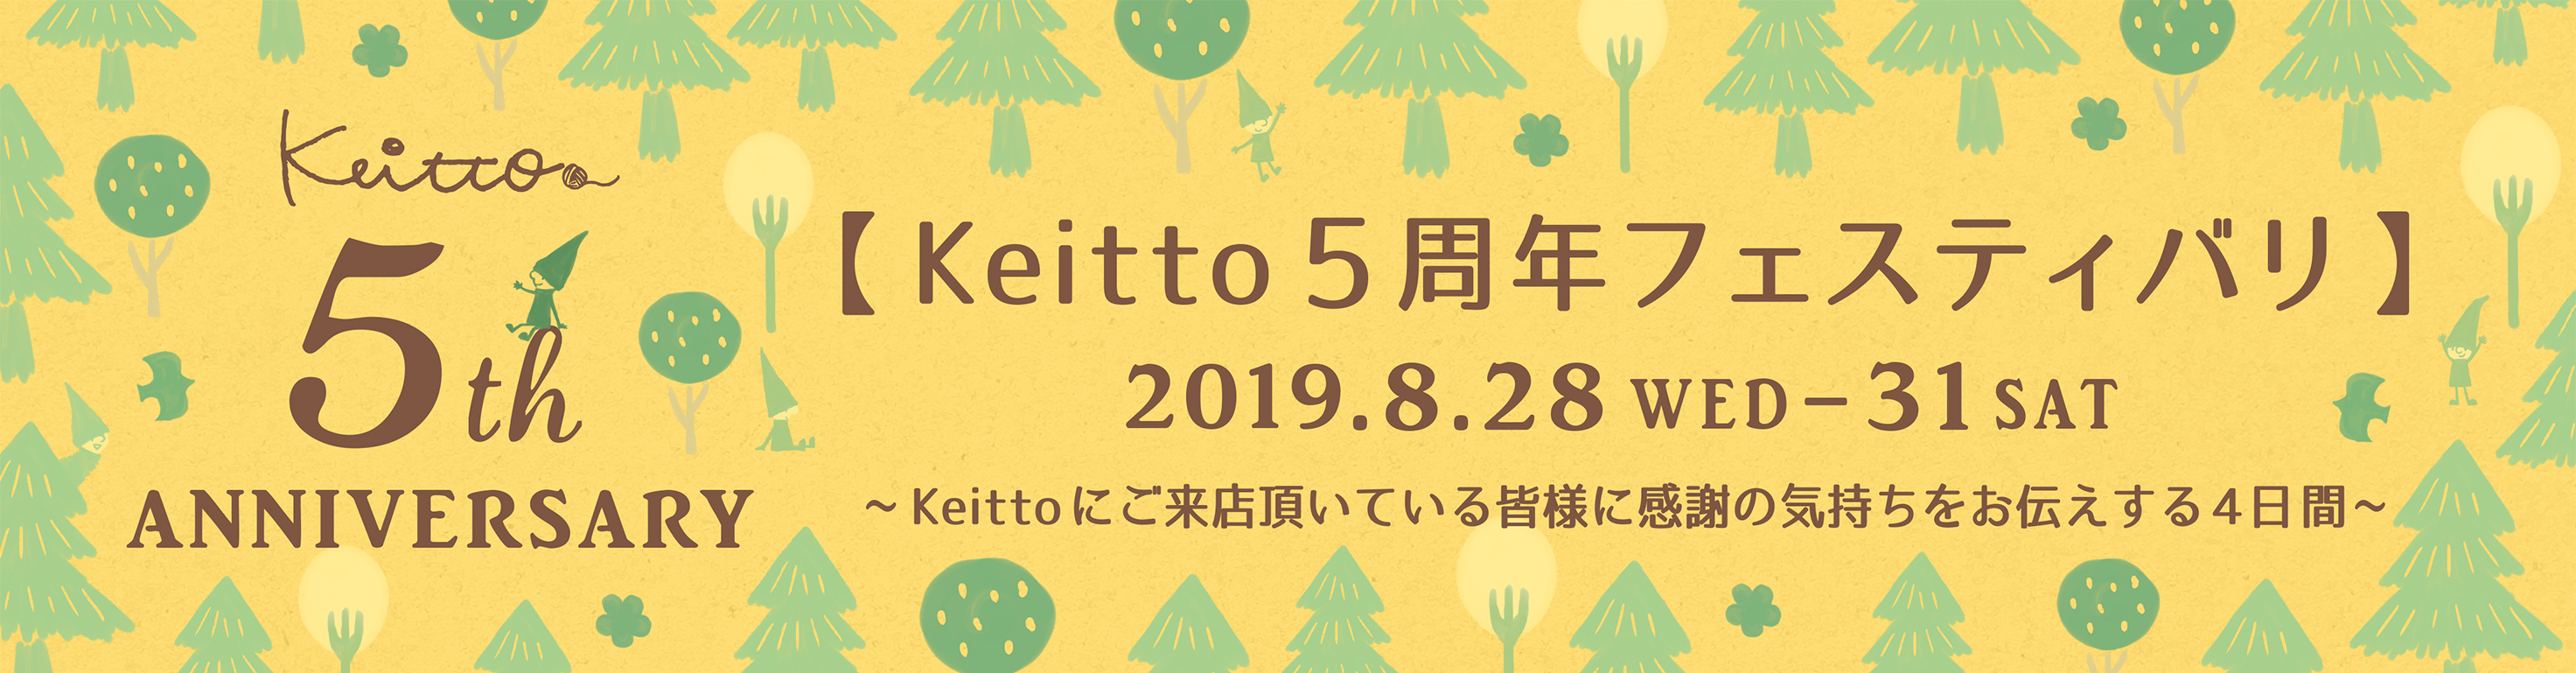 keitto5周年イベント